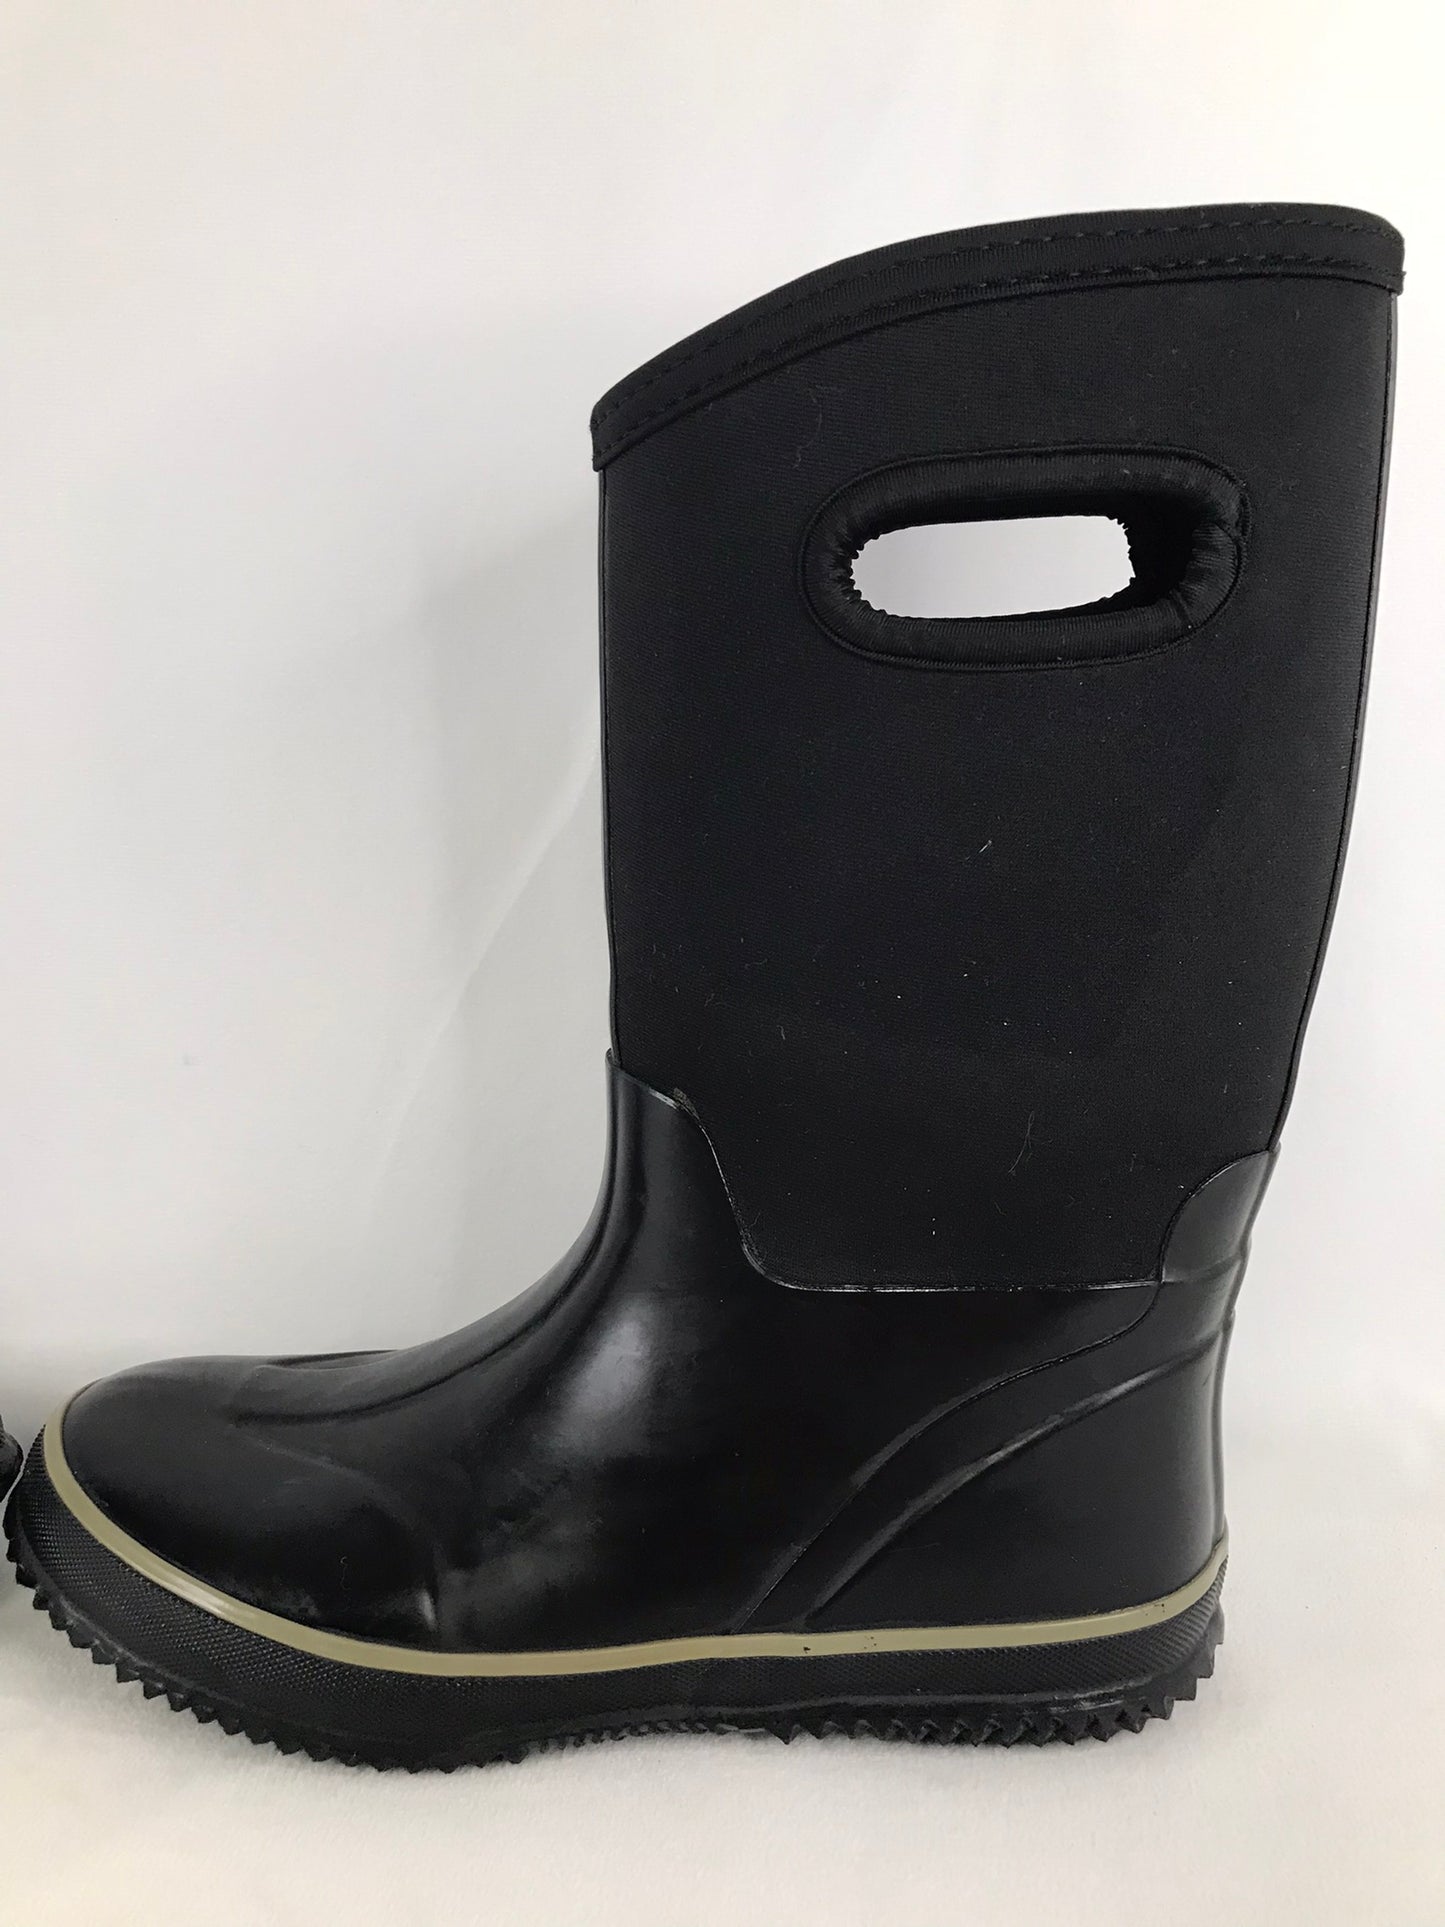 Bogs Style Child Size 5 Neoprene Rubber Rain Winter Boots Black Excellent